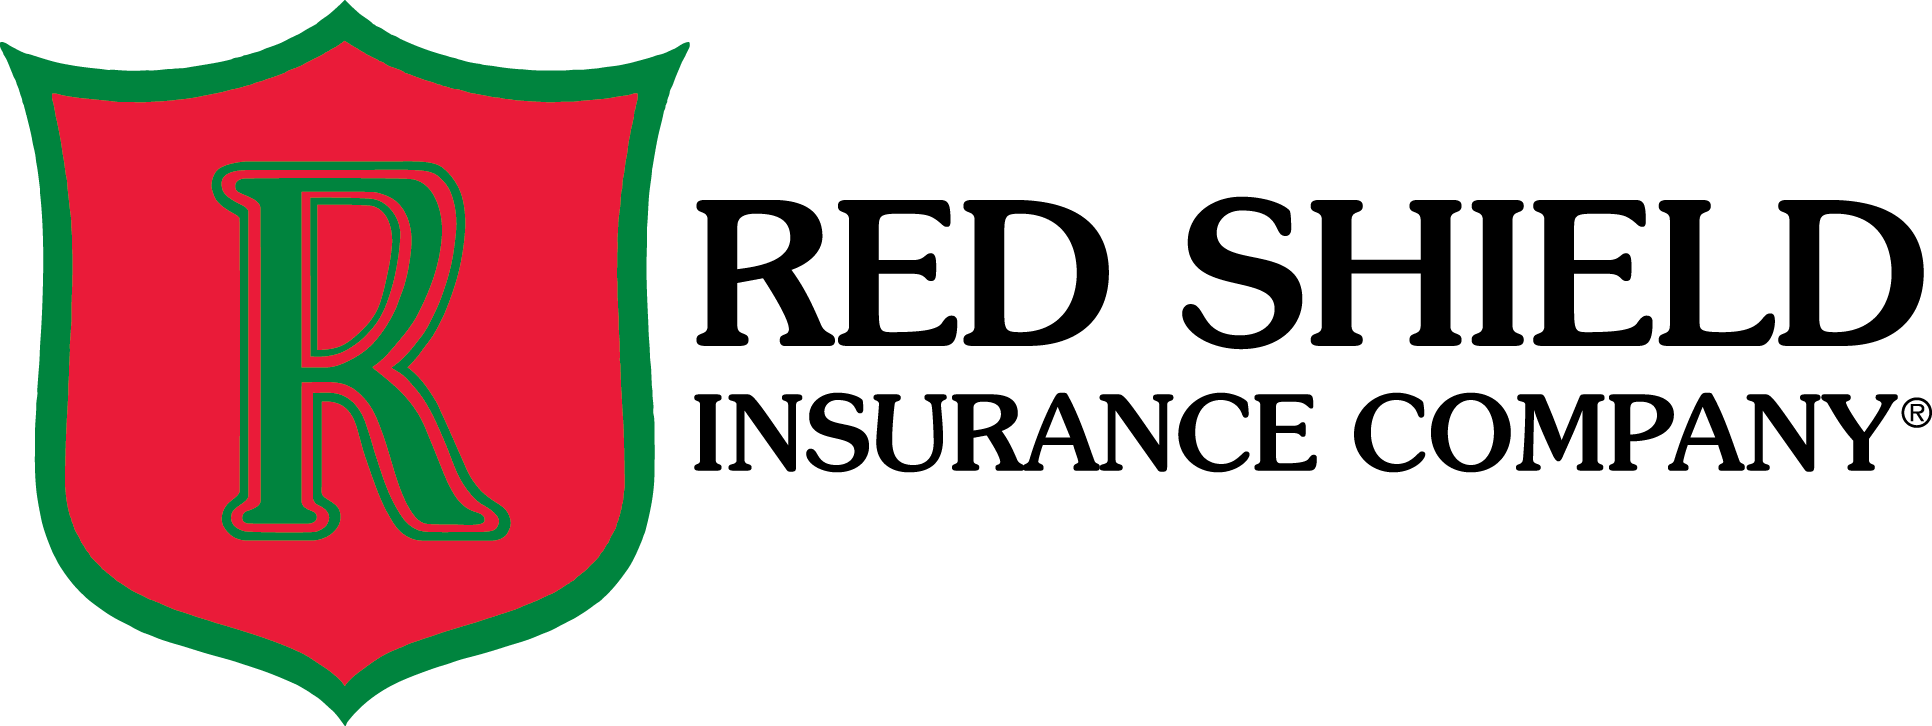 Red Shield Insurance Logo - KKlub Members - Professional Insurance Agents Western Alliance